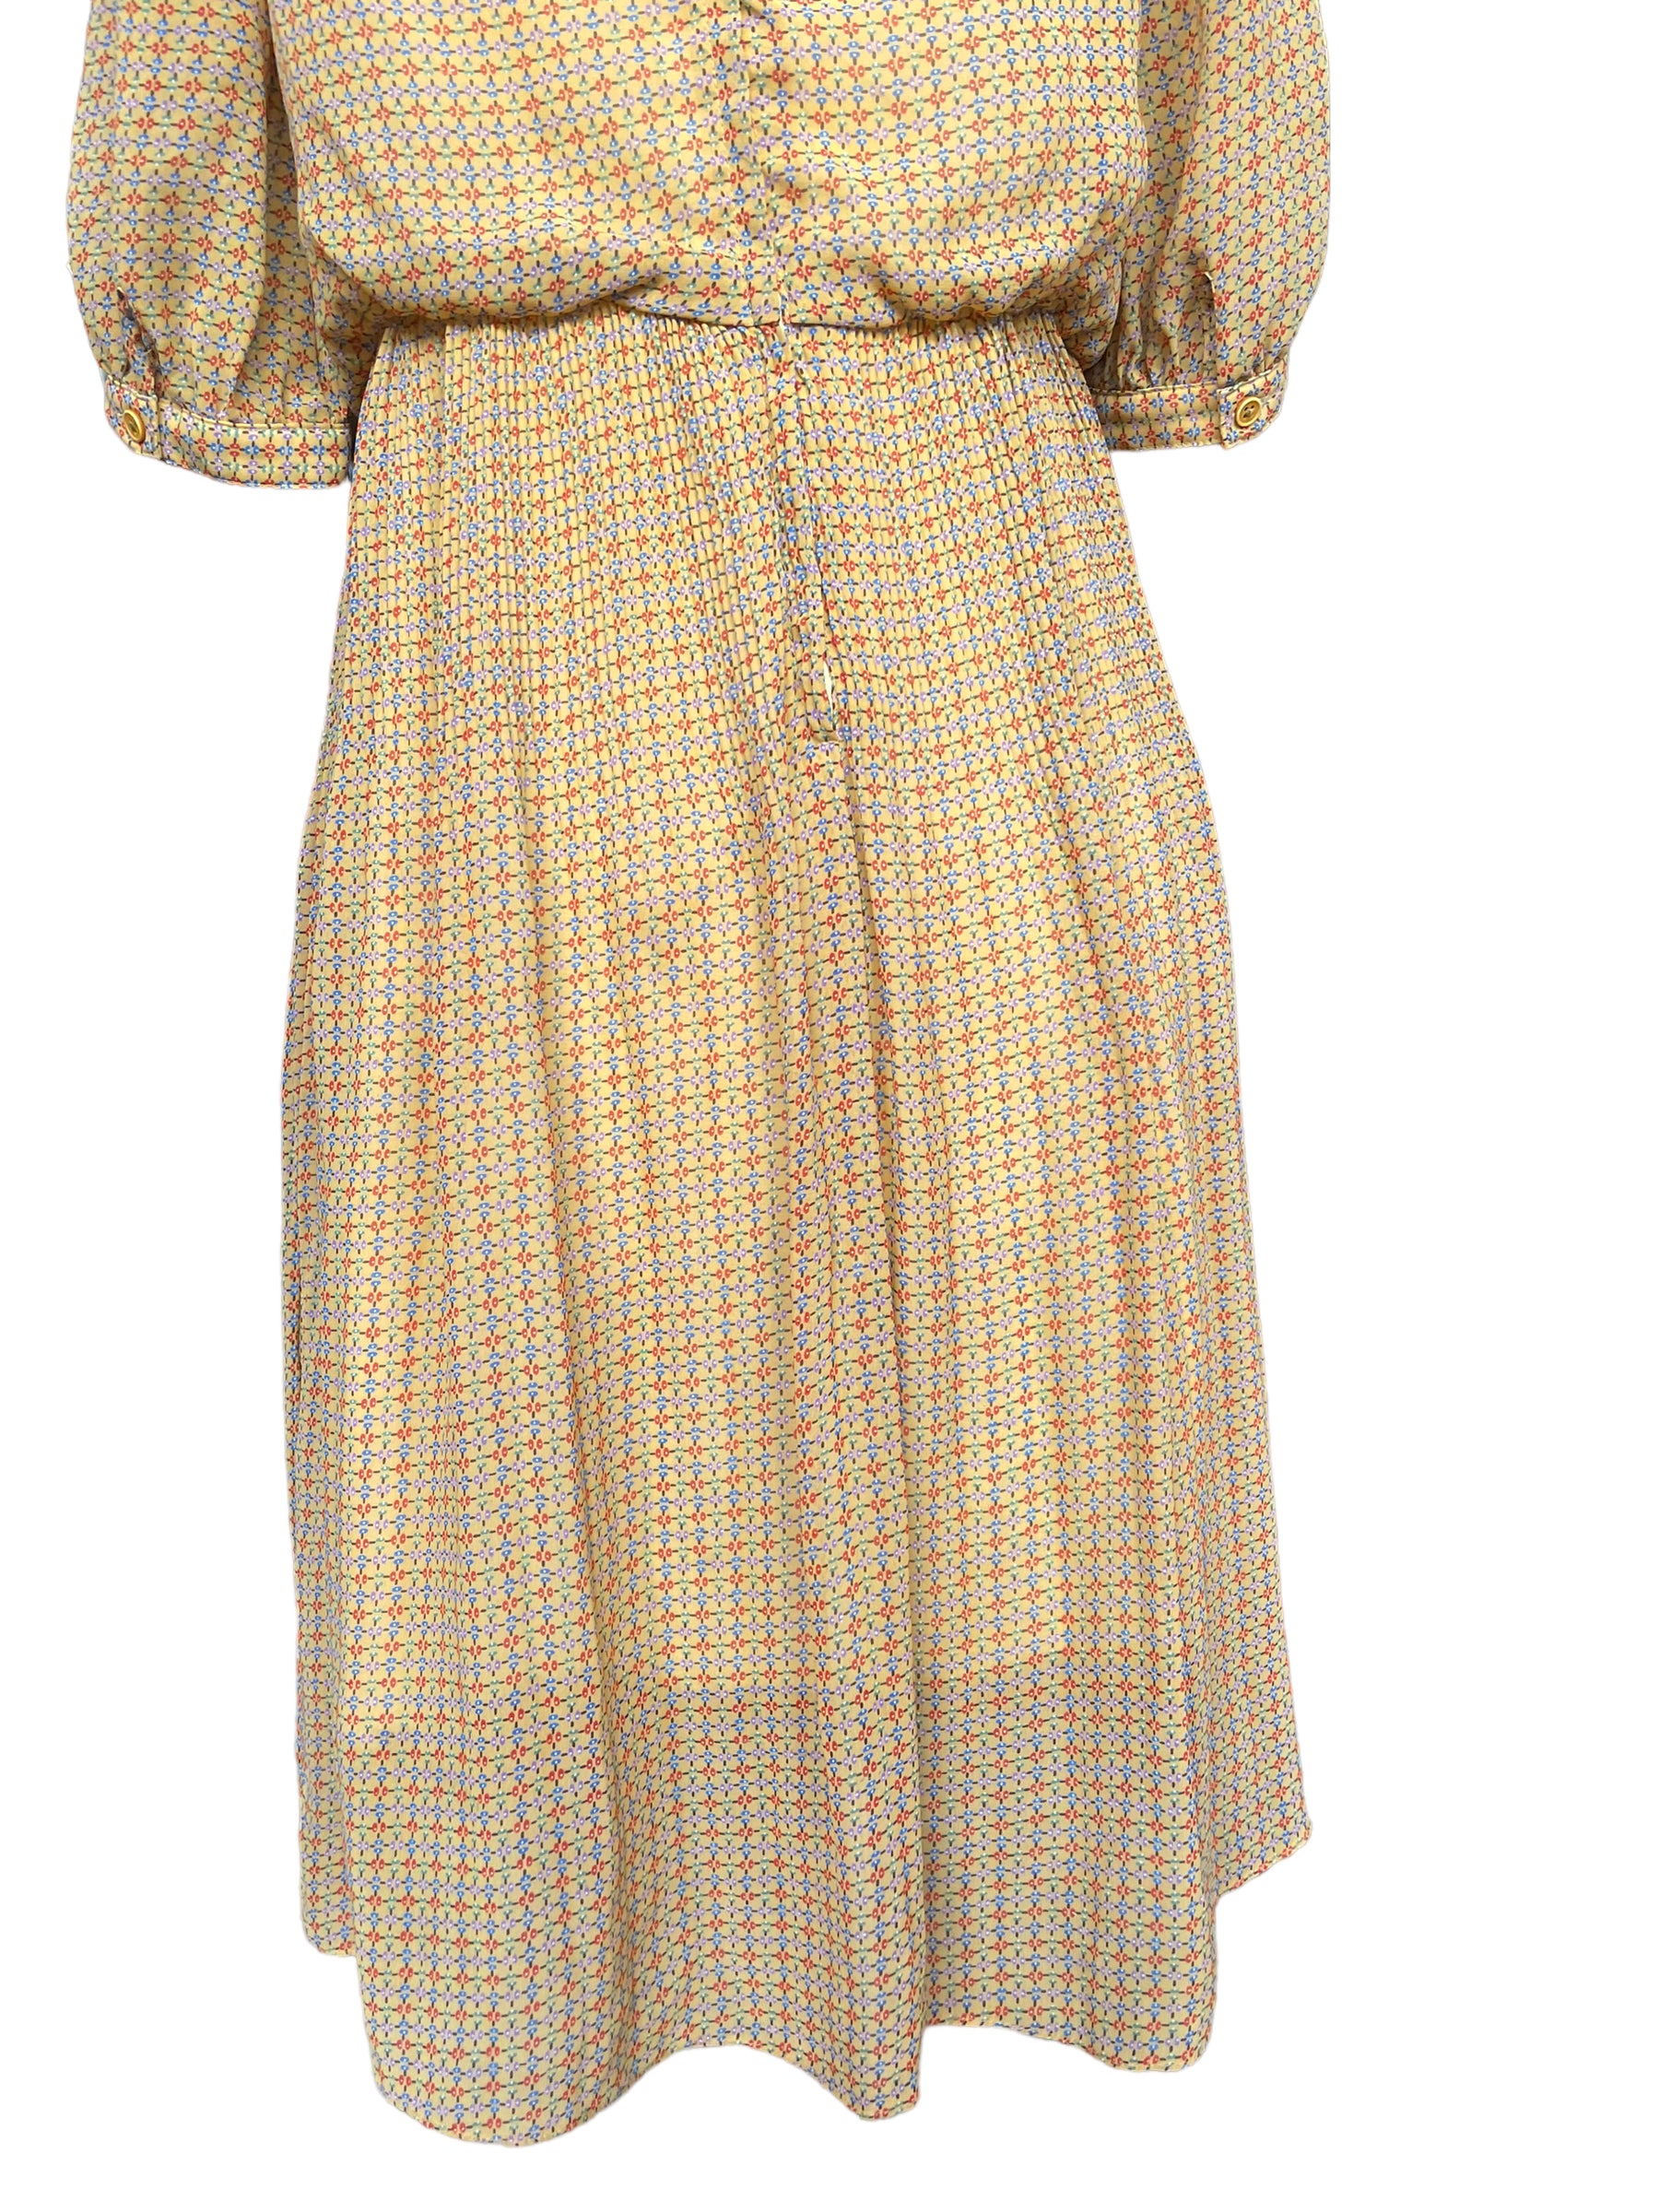 Back skirt view of Vintage 1950s Parisian Sheer Rayon Dress 